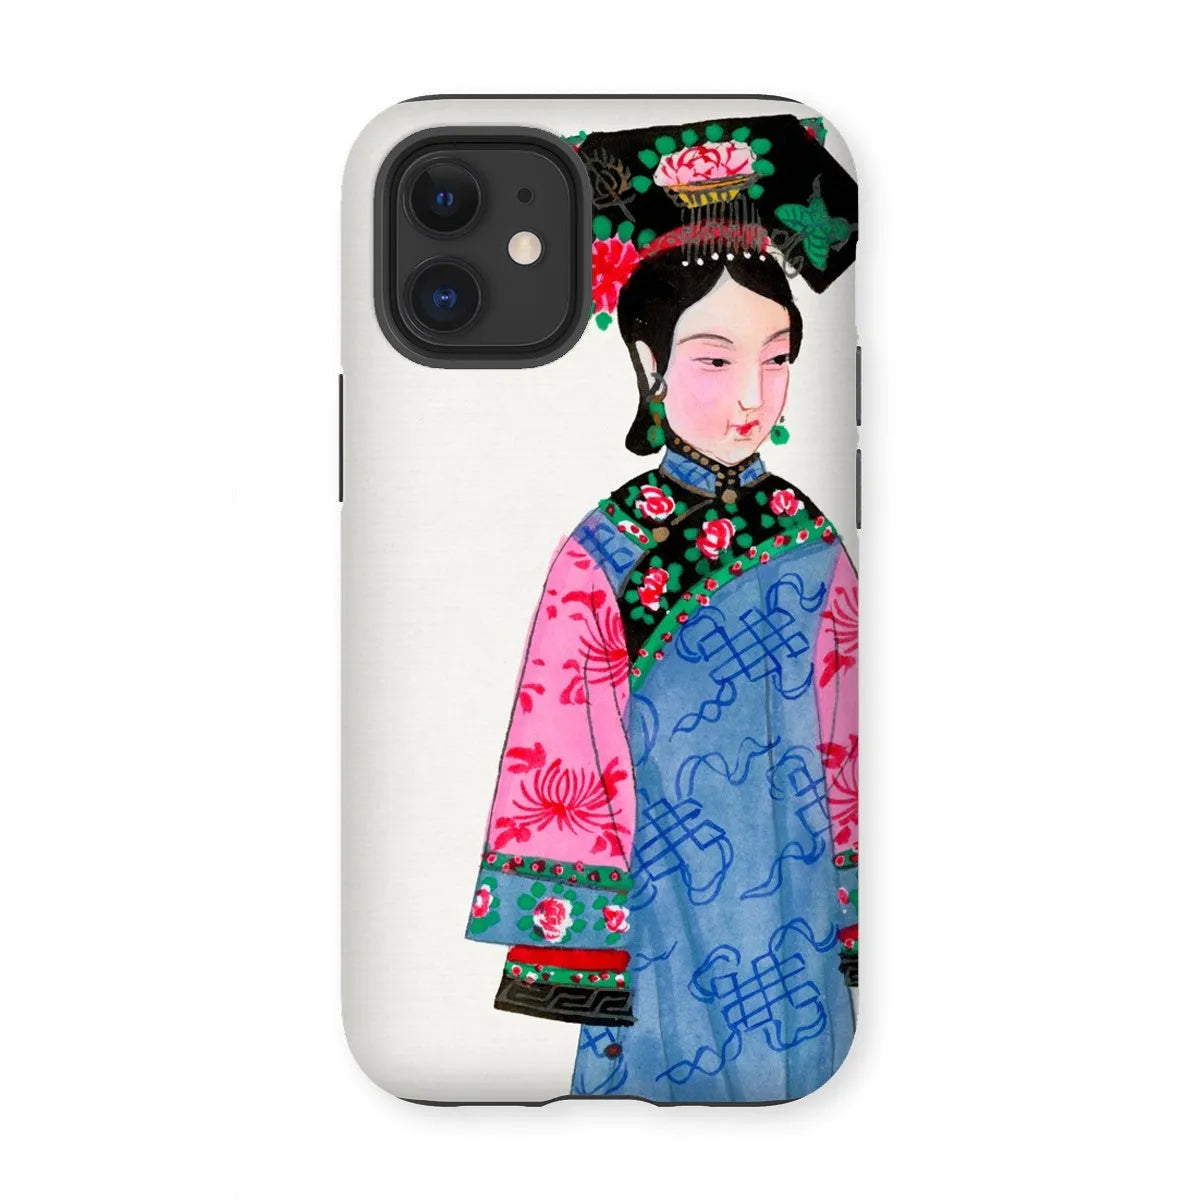 Noblewoman Too - Manchu Aesthetic Art Phone Case - Iphone 12 Mini / Matte - Mobile Phone Cases - Aesthetic Art